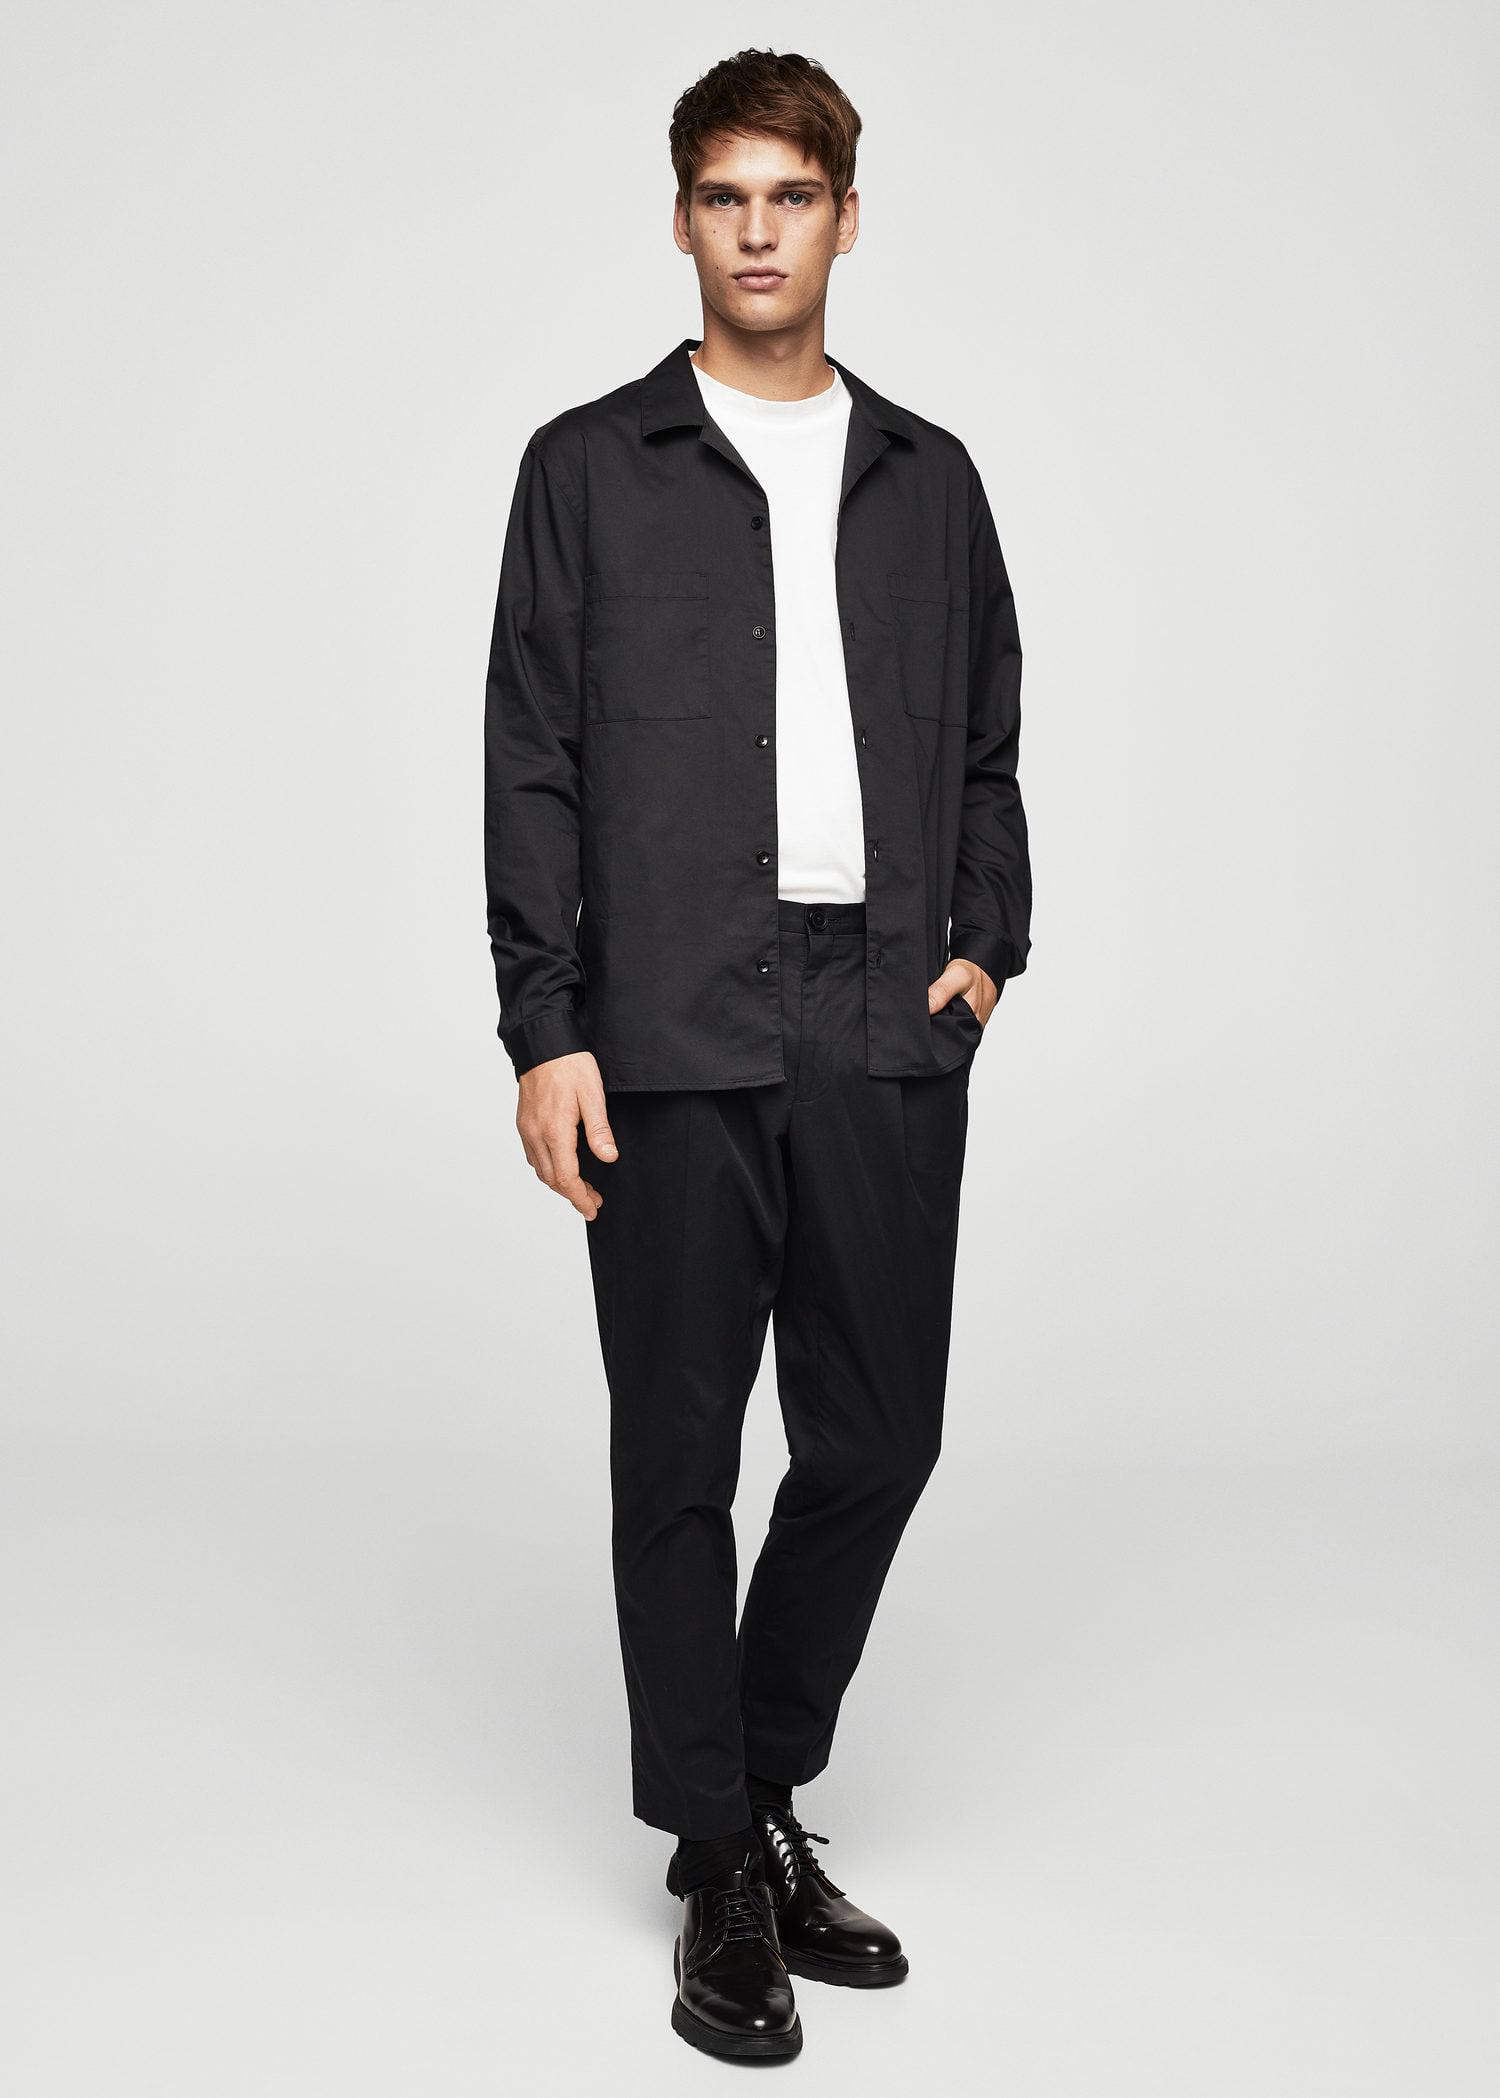 Lyst - Mango Regular-fit Cotton Shirt in Black for Men